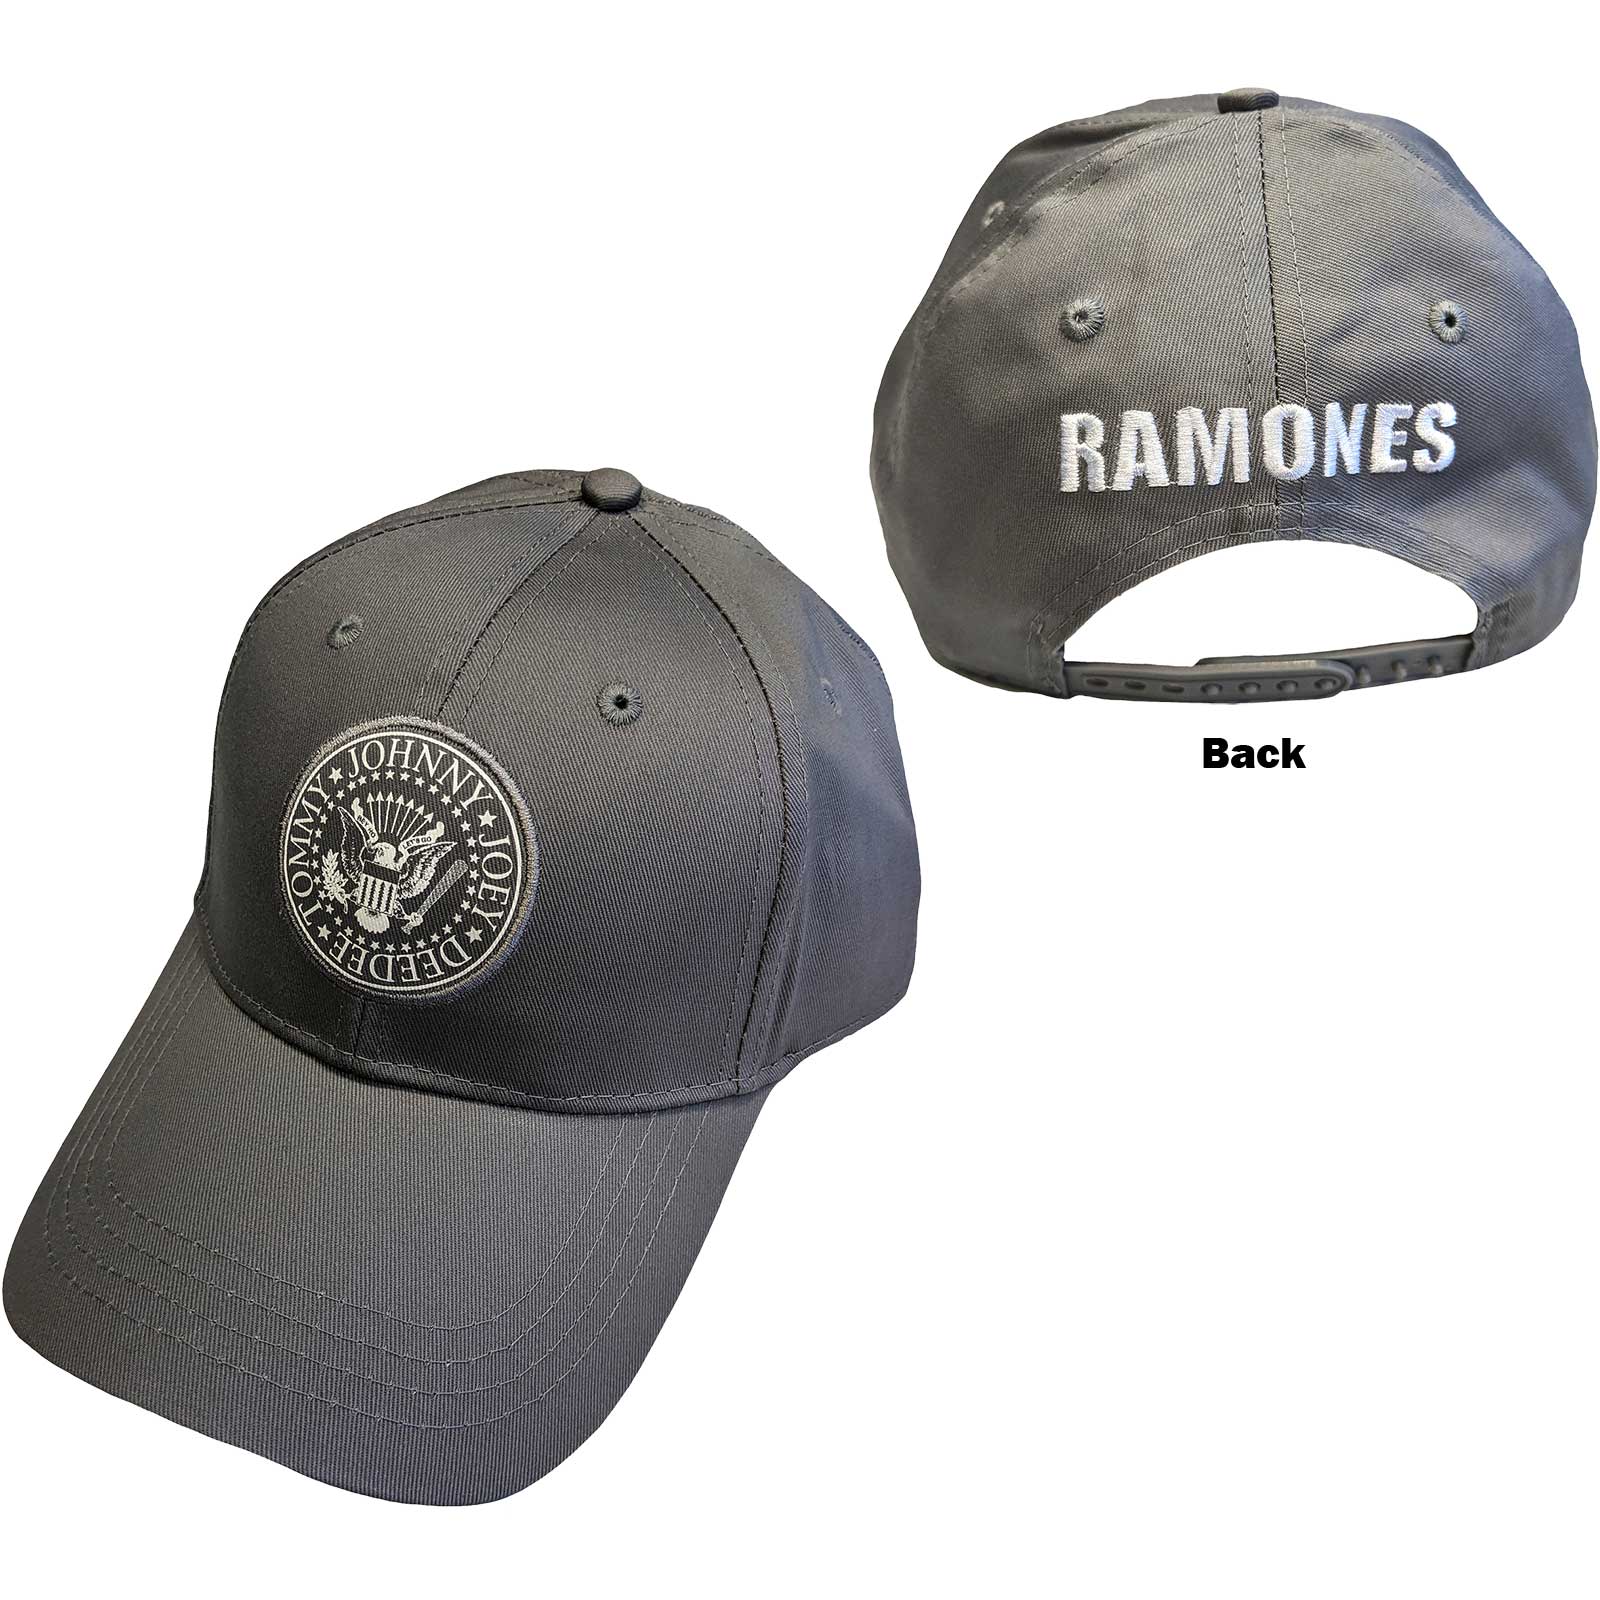 Ramones Unisex Baseball Cap - Presidential Seal - Grey - Official Product